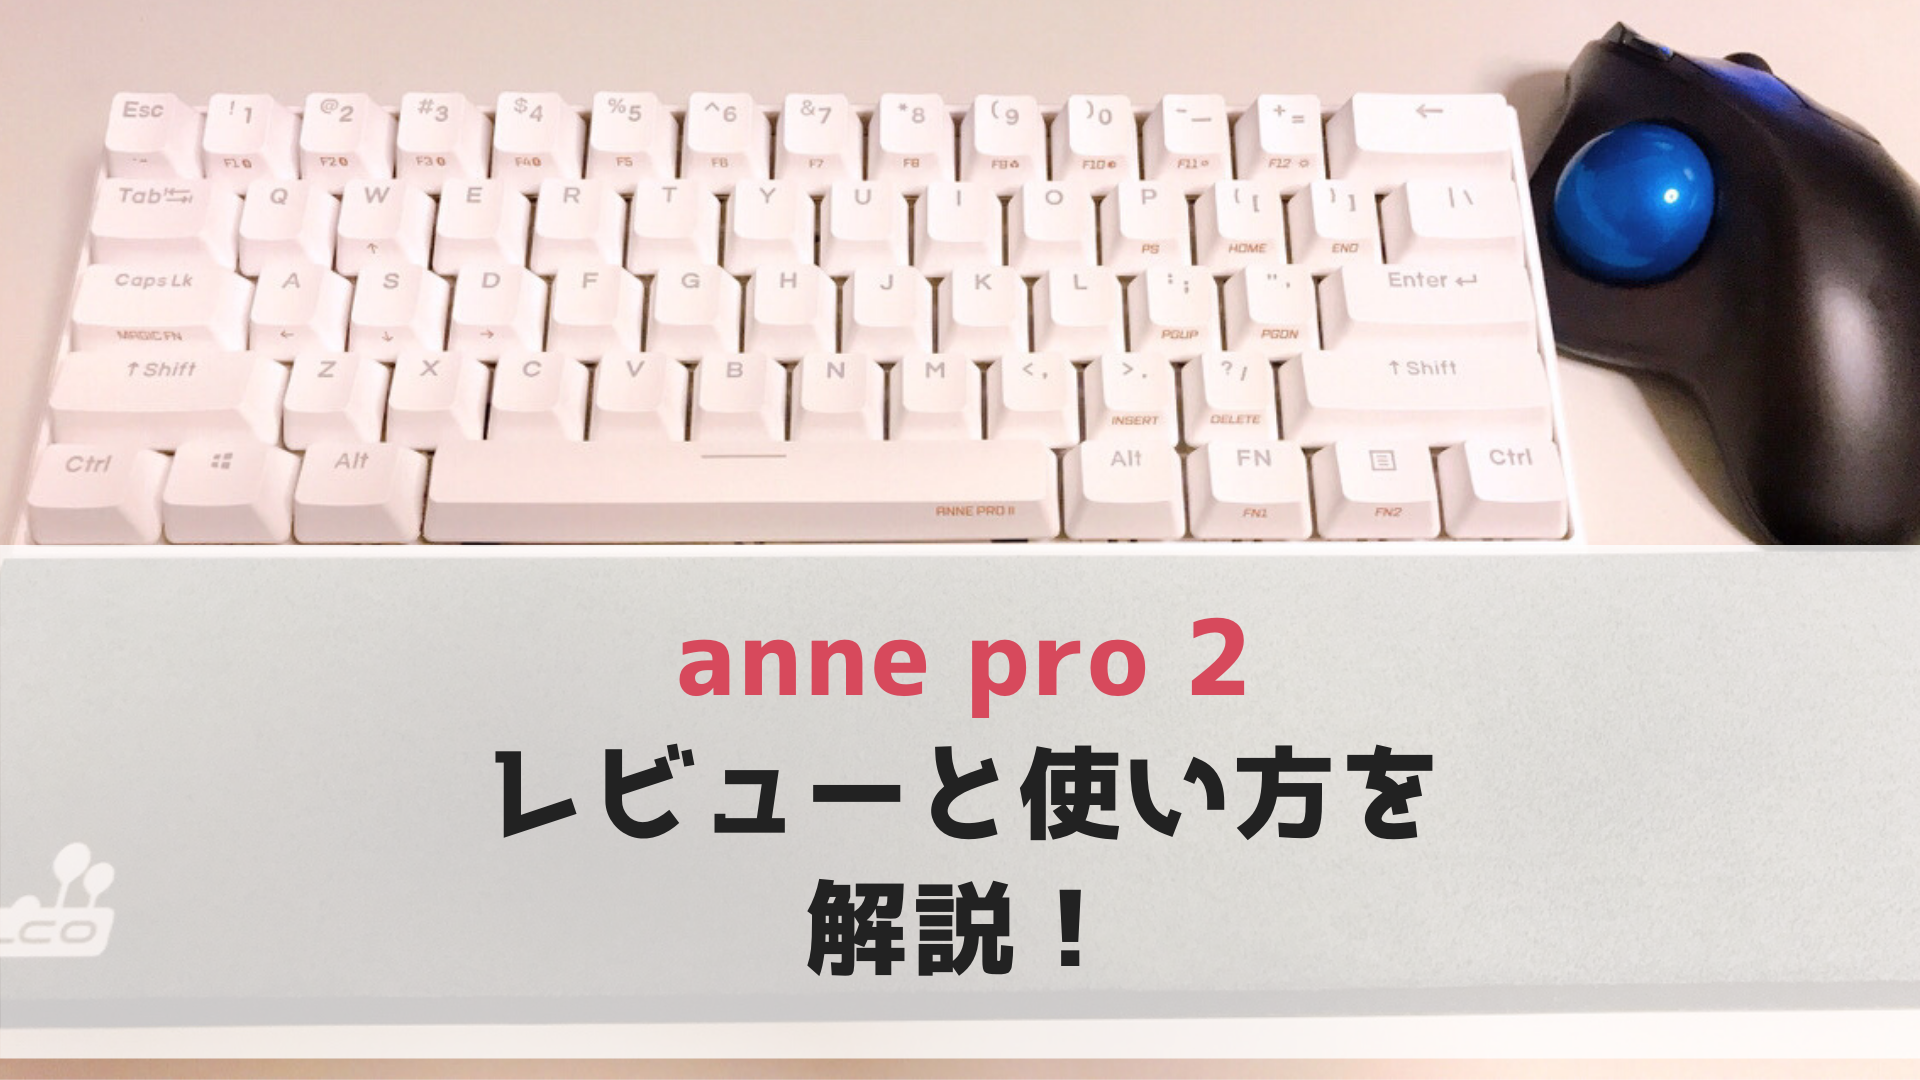 Anne Pro 2 のキーボード購入レビュー 解明した使い方も解説 M Size